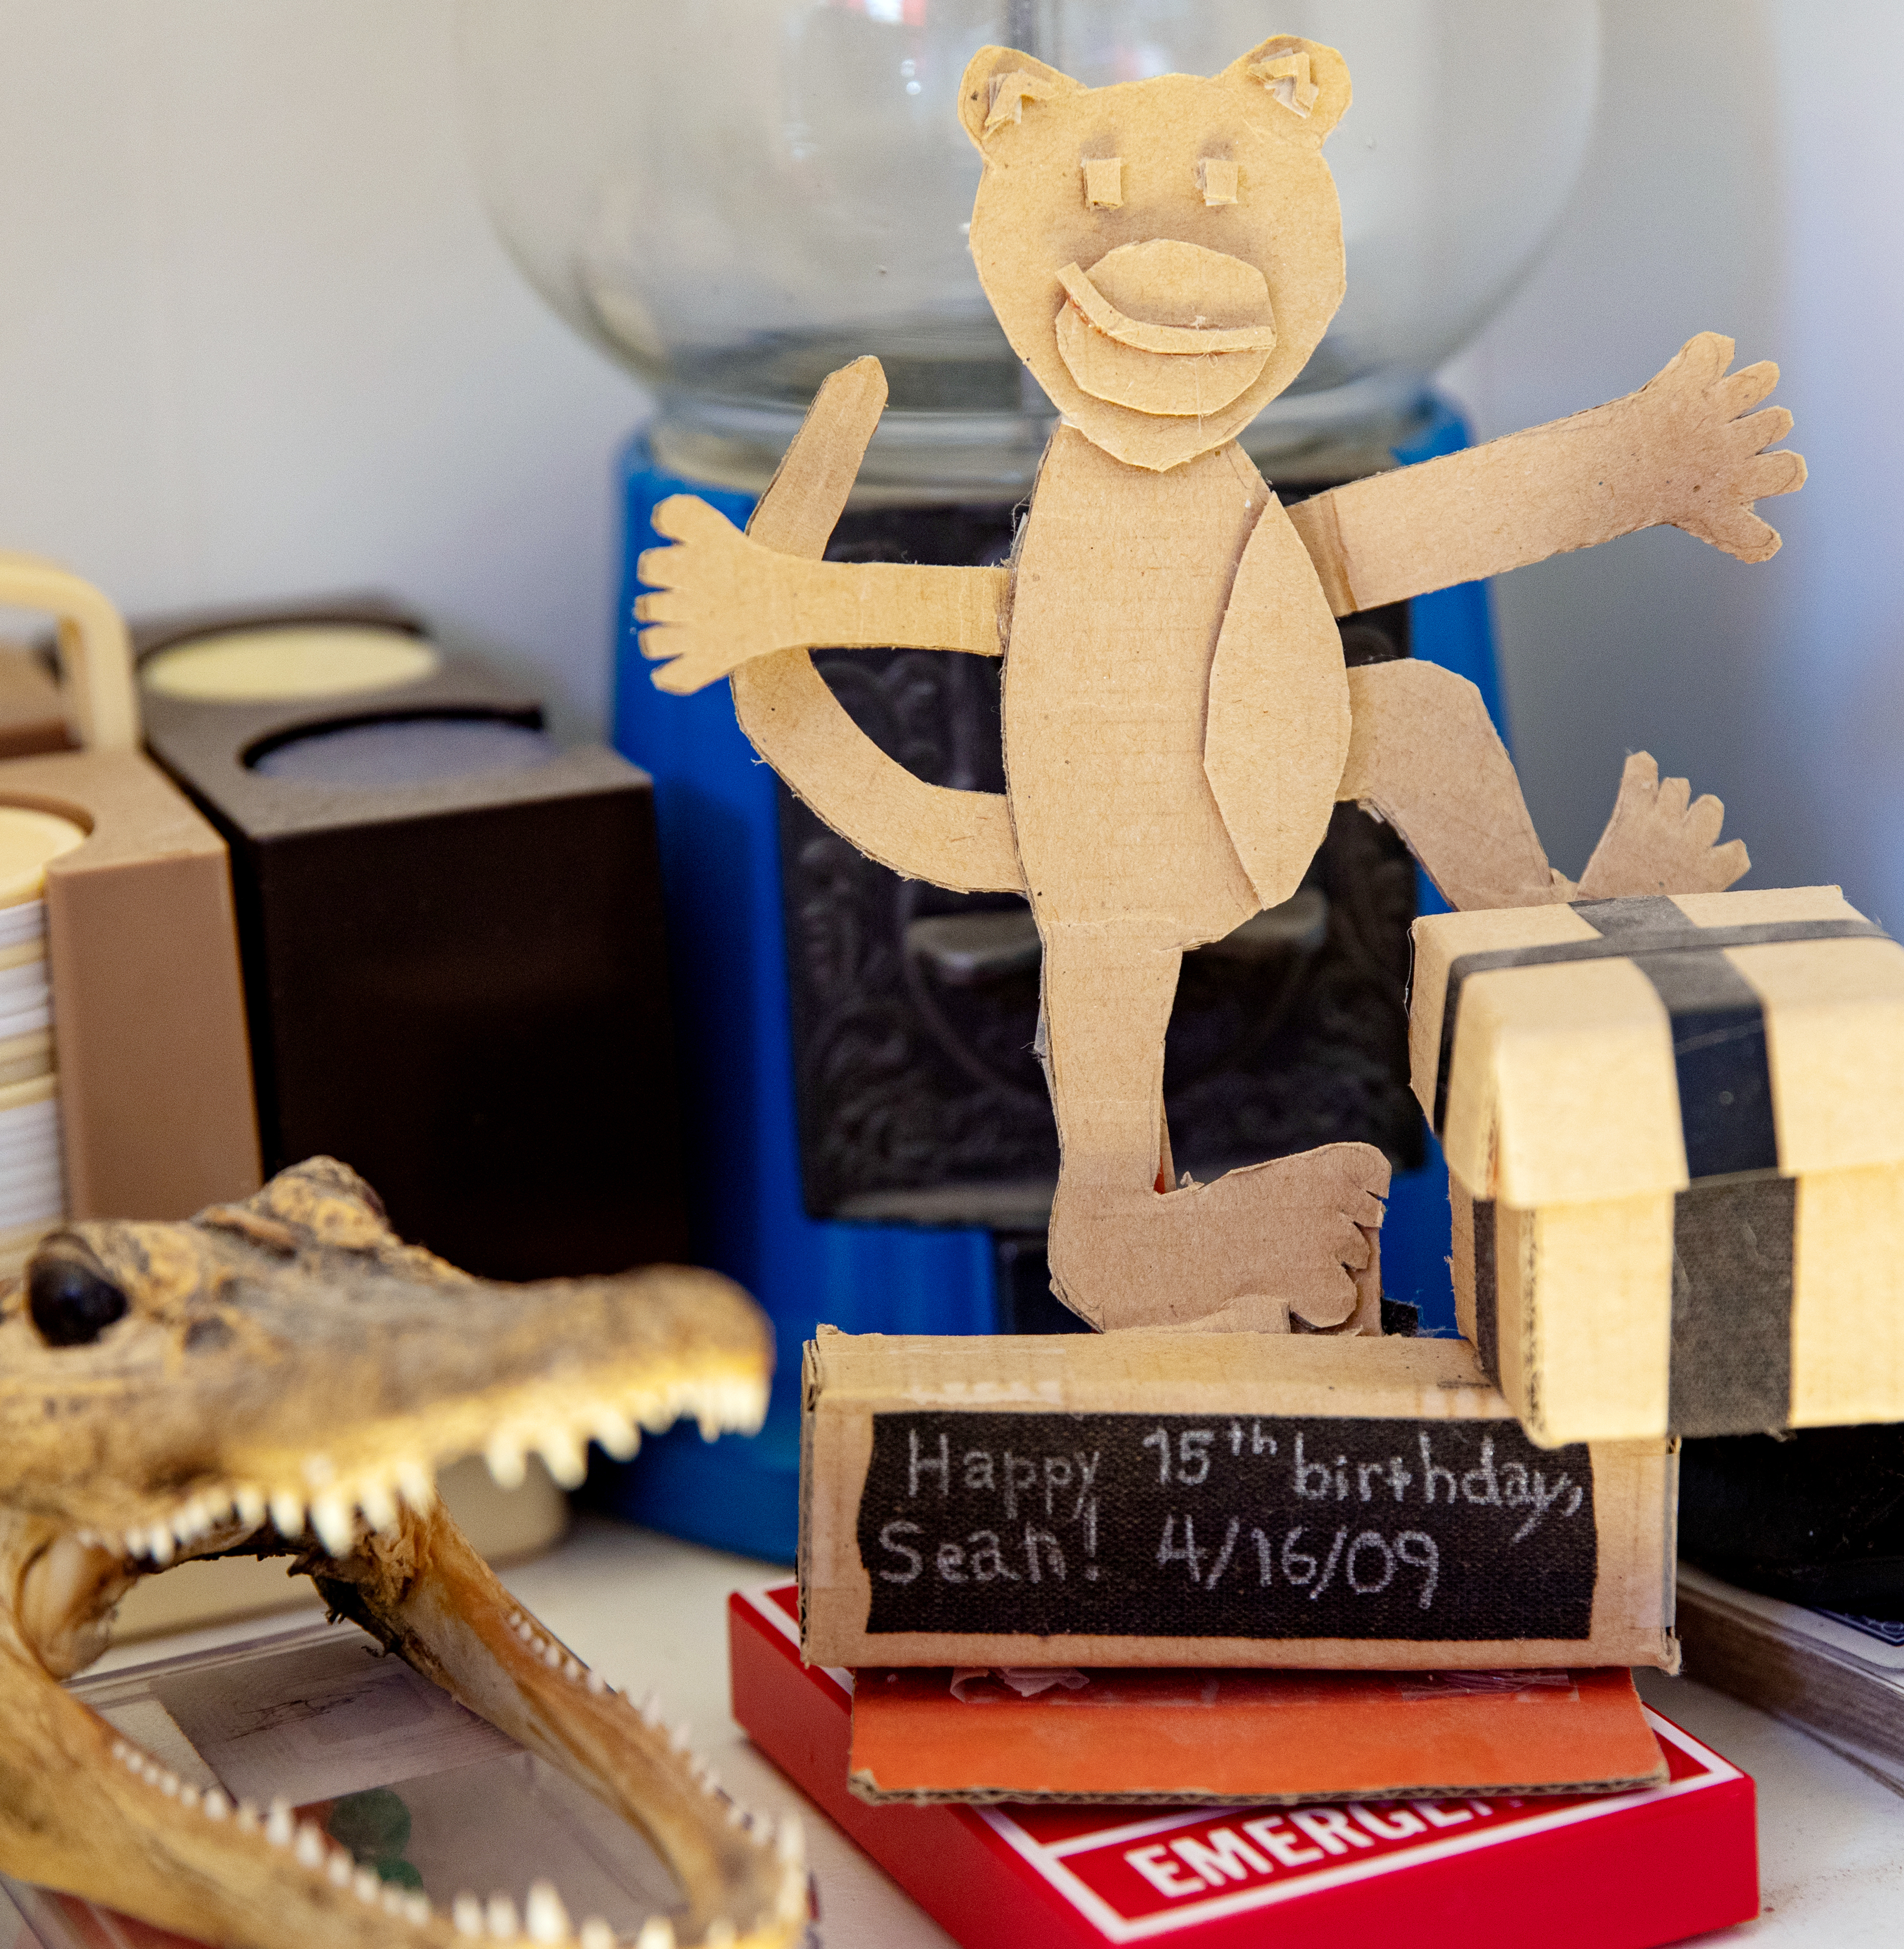 A cardboard bear figure stands near a crocodile skull and a birthday message on a shelf.